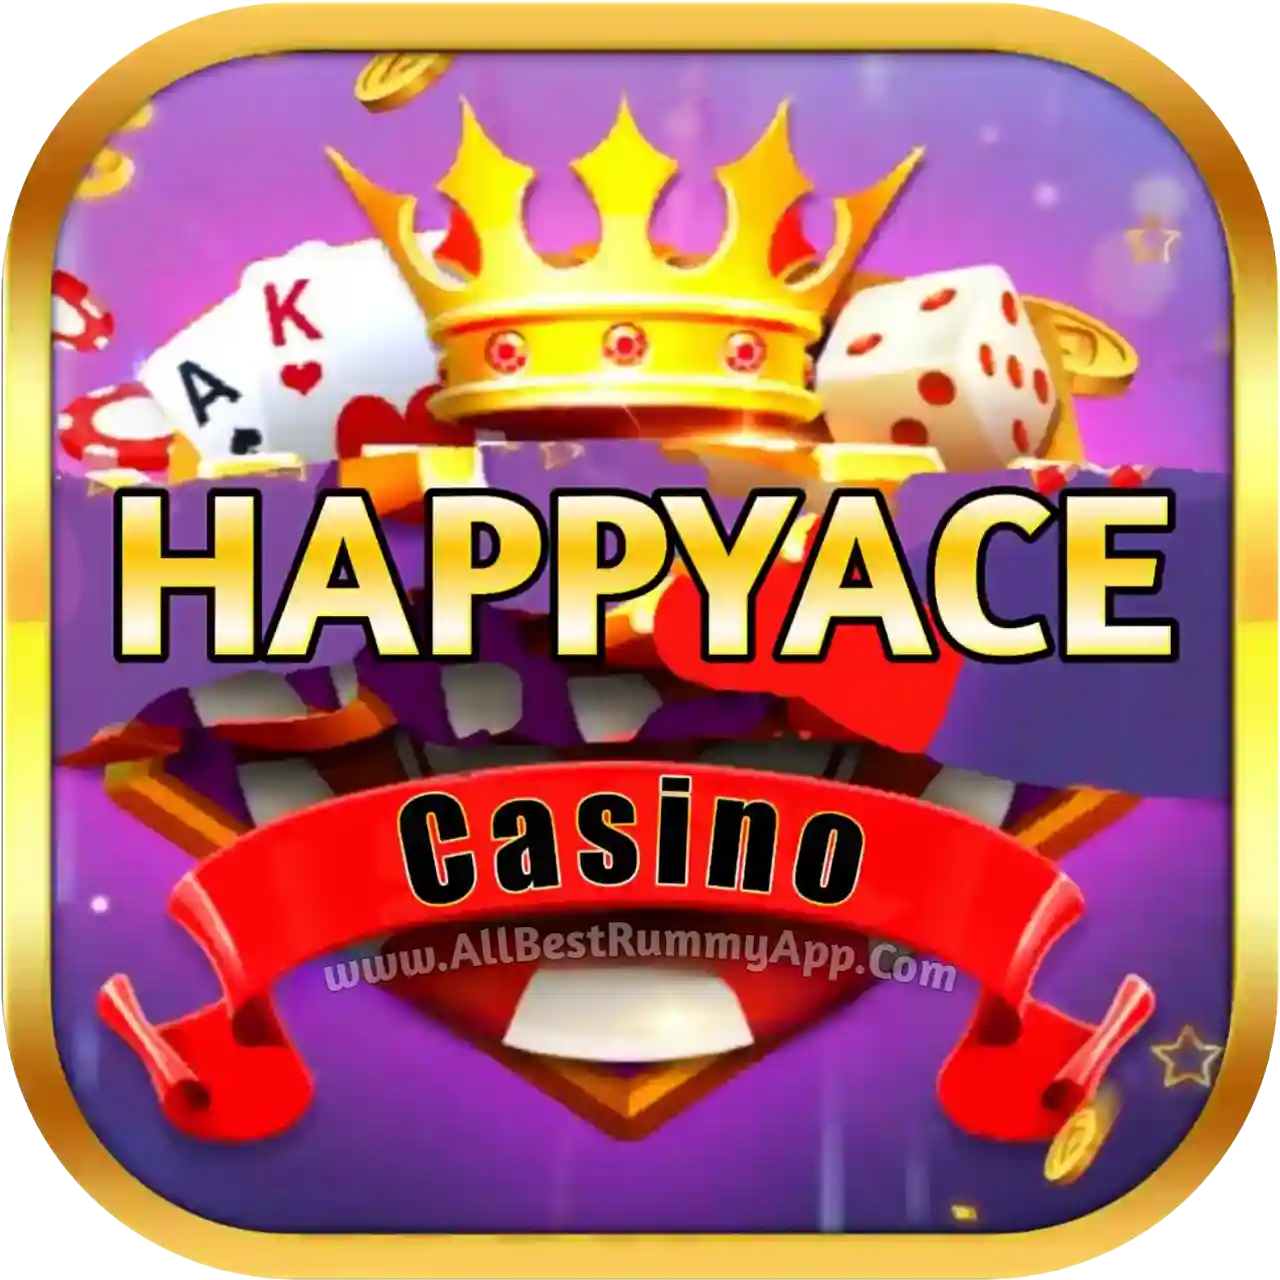 Happy Ace Casino Logo - All Best Rummy App